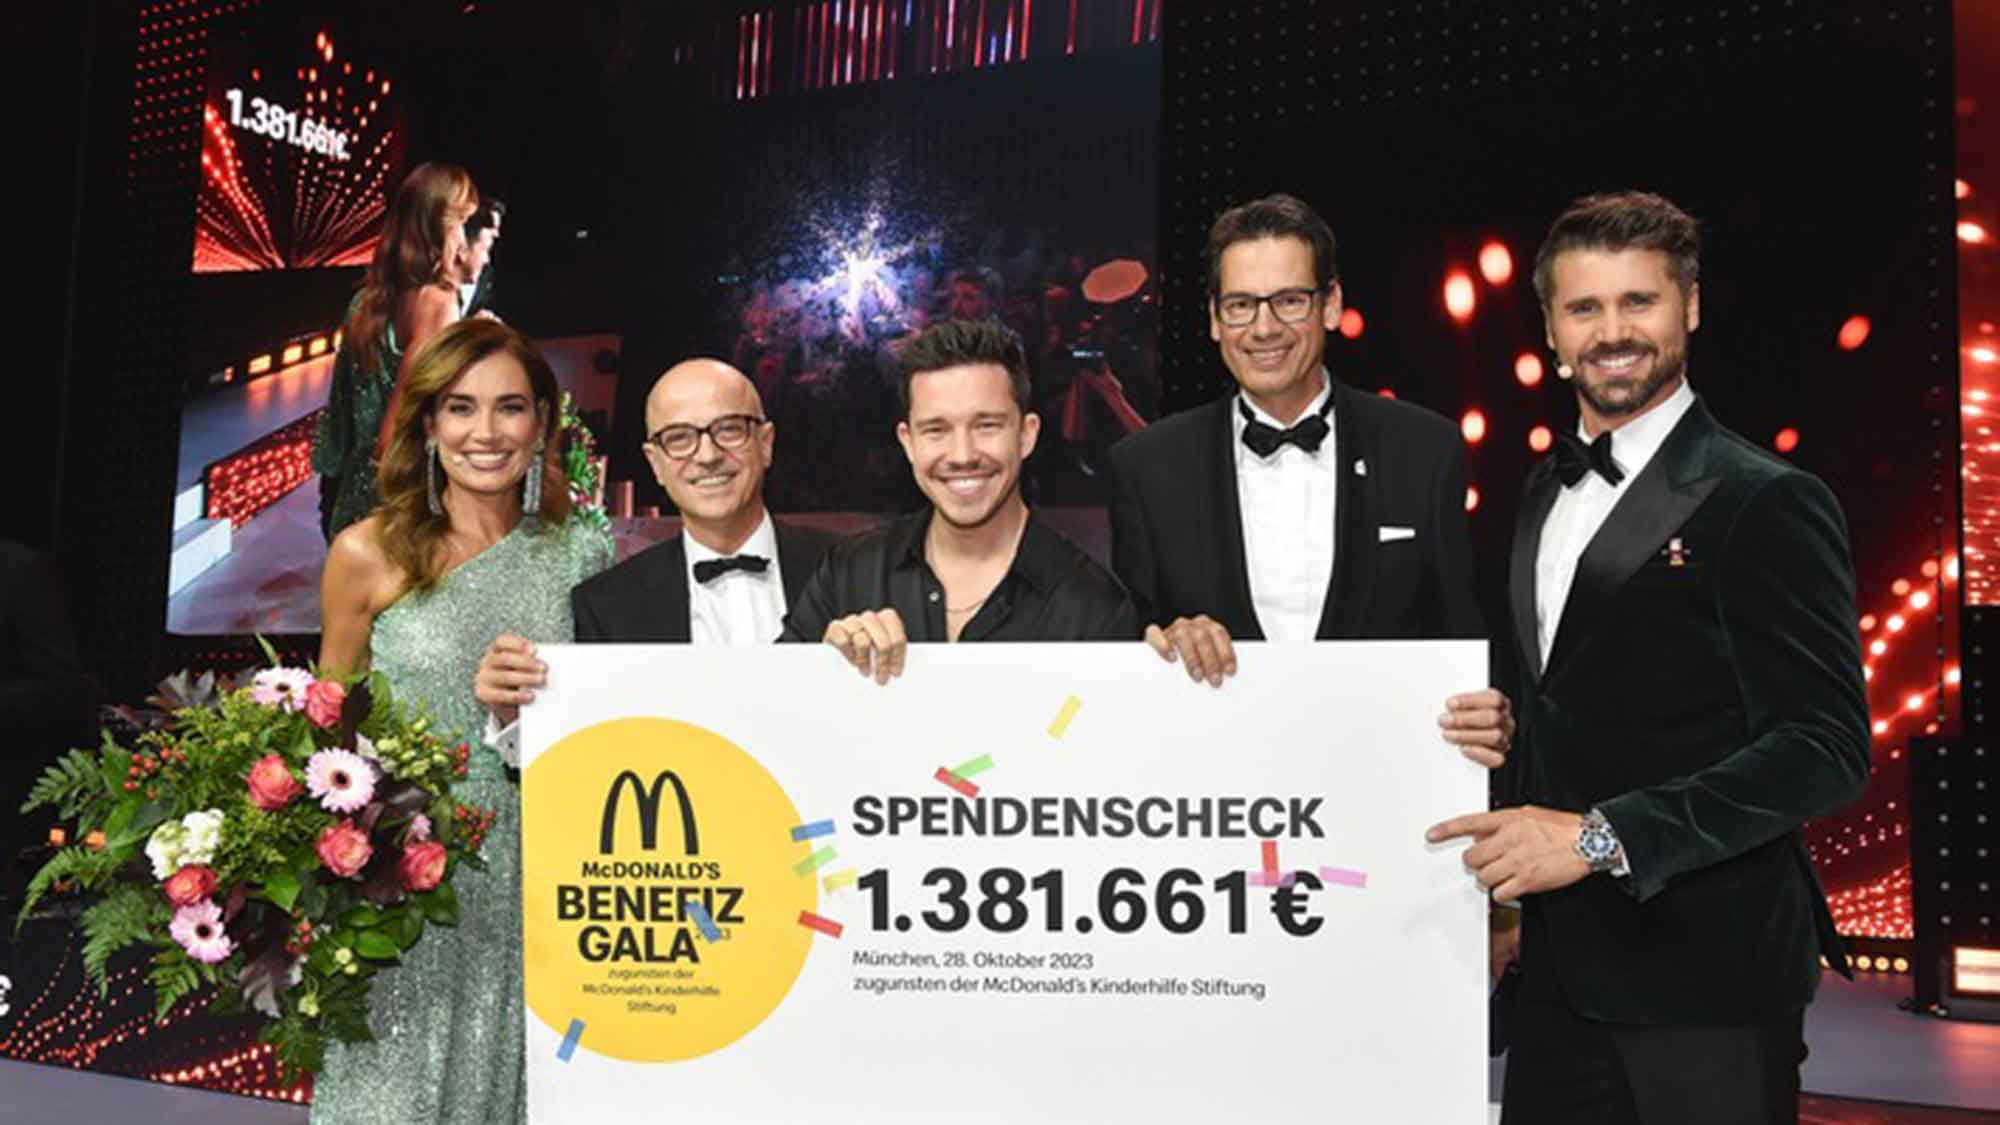 McDonald’s Benefiz Gala sammelt 1.381.661 Euro Spenden zugunsten der McDonald’s Kinderhilfe Stiftung